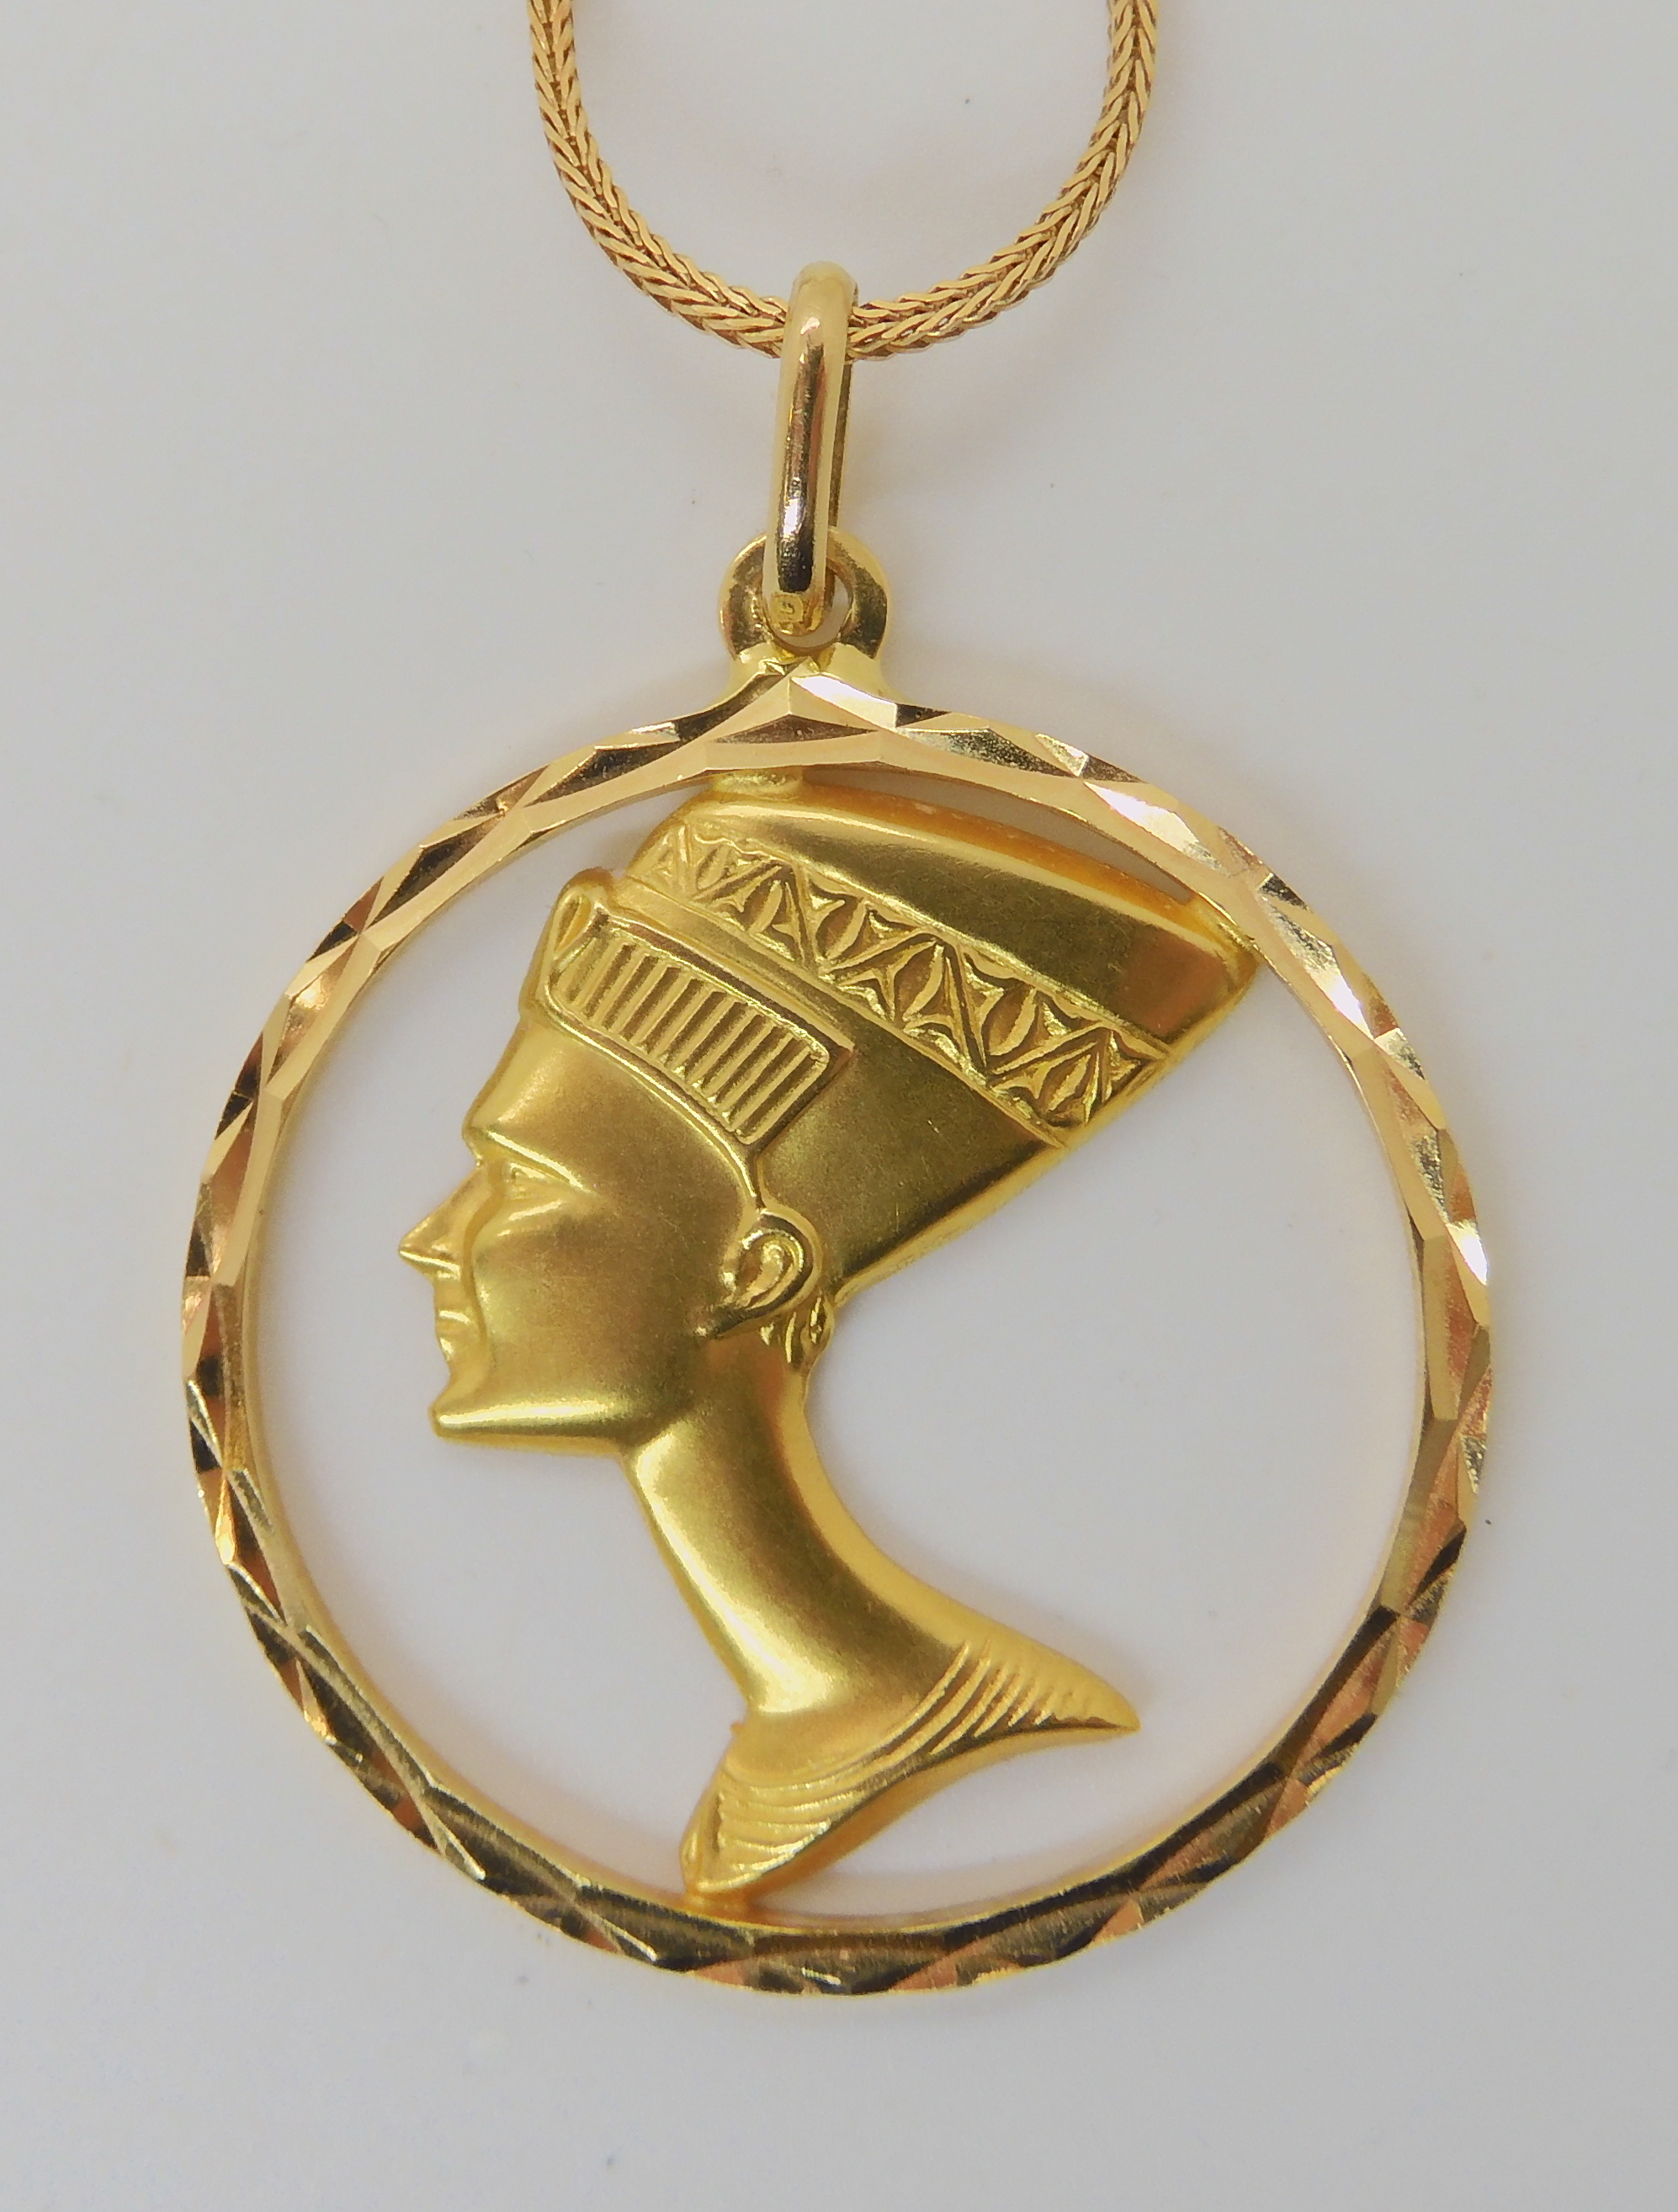 A 18k Nefertiti pendant diameter 3.5cm, on an 18ct gold Italian herringbone chain length 60cm - Image 2 of 2